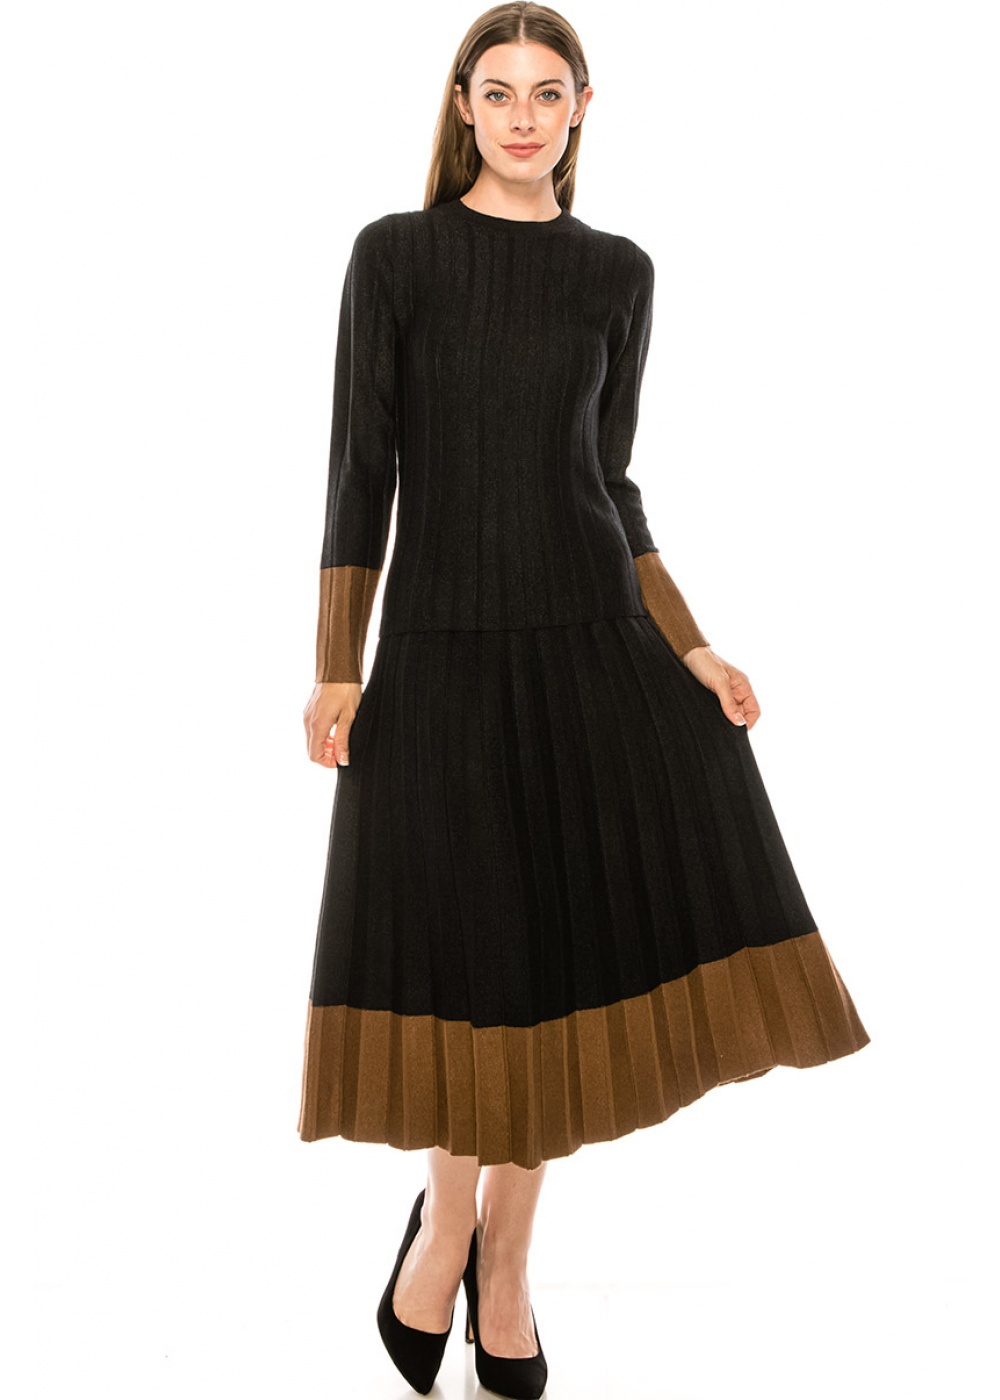 High-waist black pleated skirt with brown hem